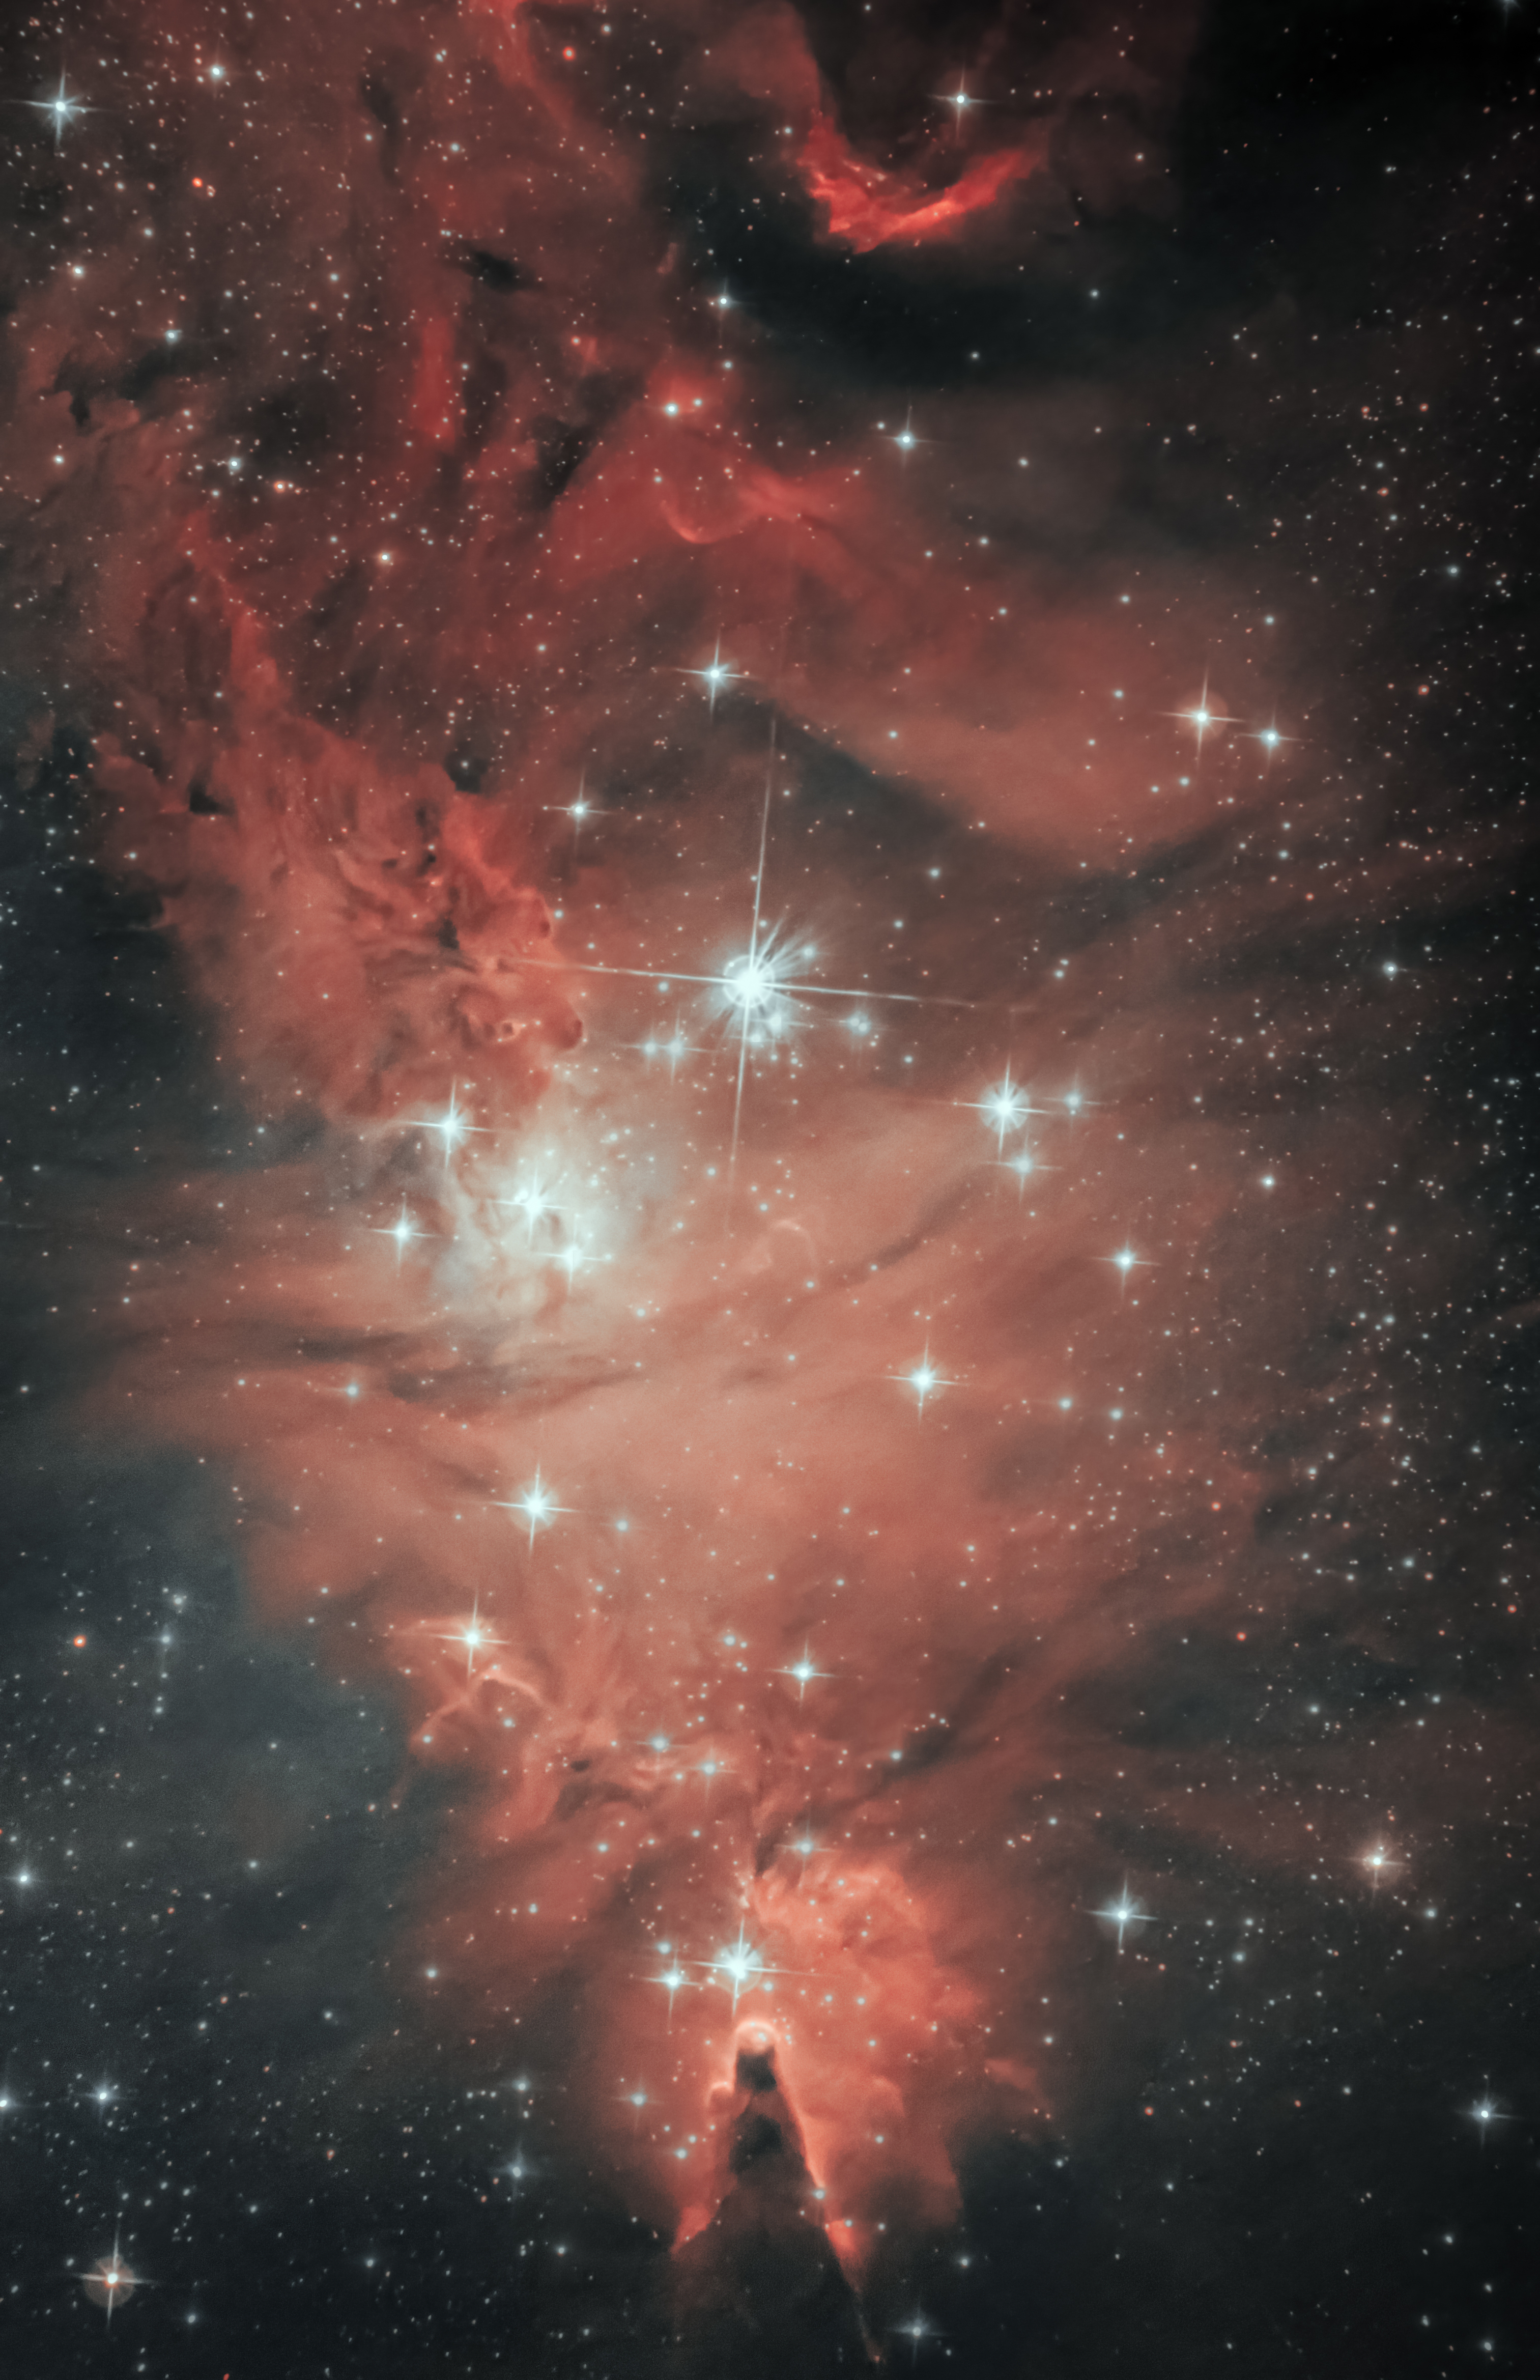 NGC2264 (Nébuleuse du cône + Sapin de noel) I1kq